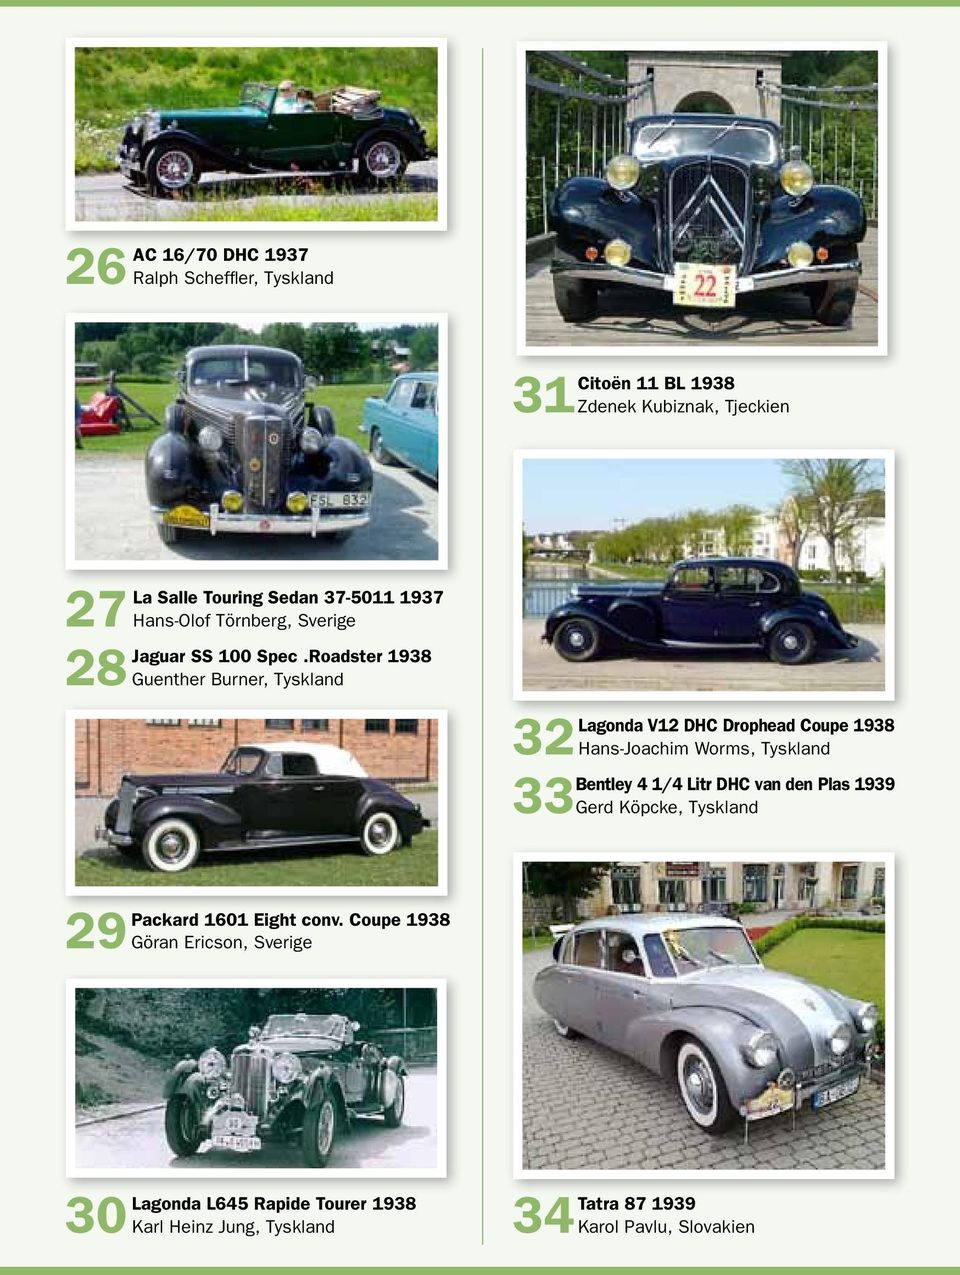 Roadster 1938 28 Guenther Burner, Tyskland Lagonda V12 DHC Drophead Coupe 1938 32 Hans-Joachim Worms, Tyskland Bentley 4 1/4 Litr